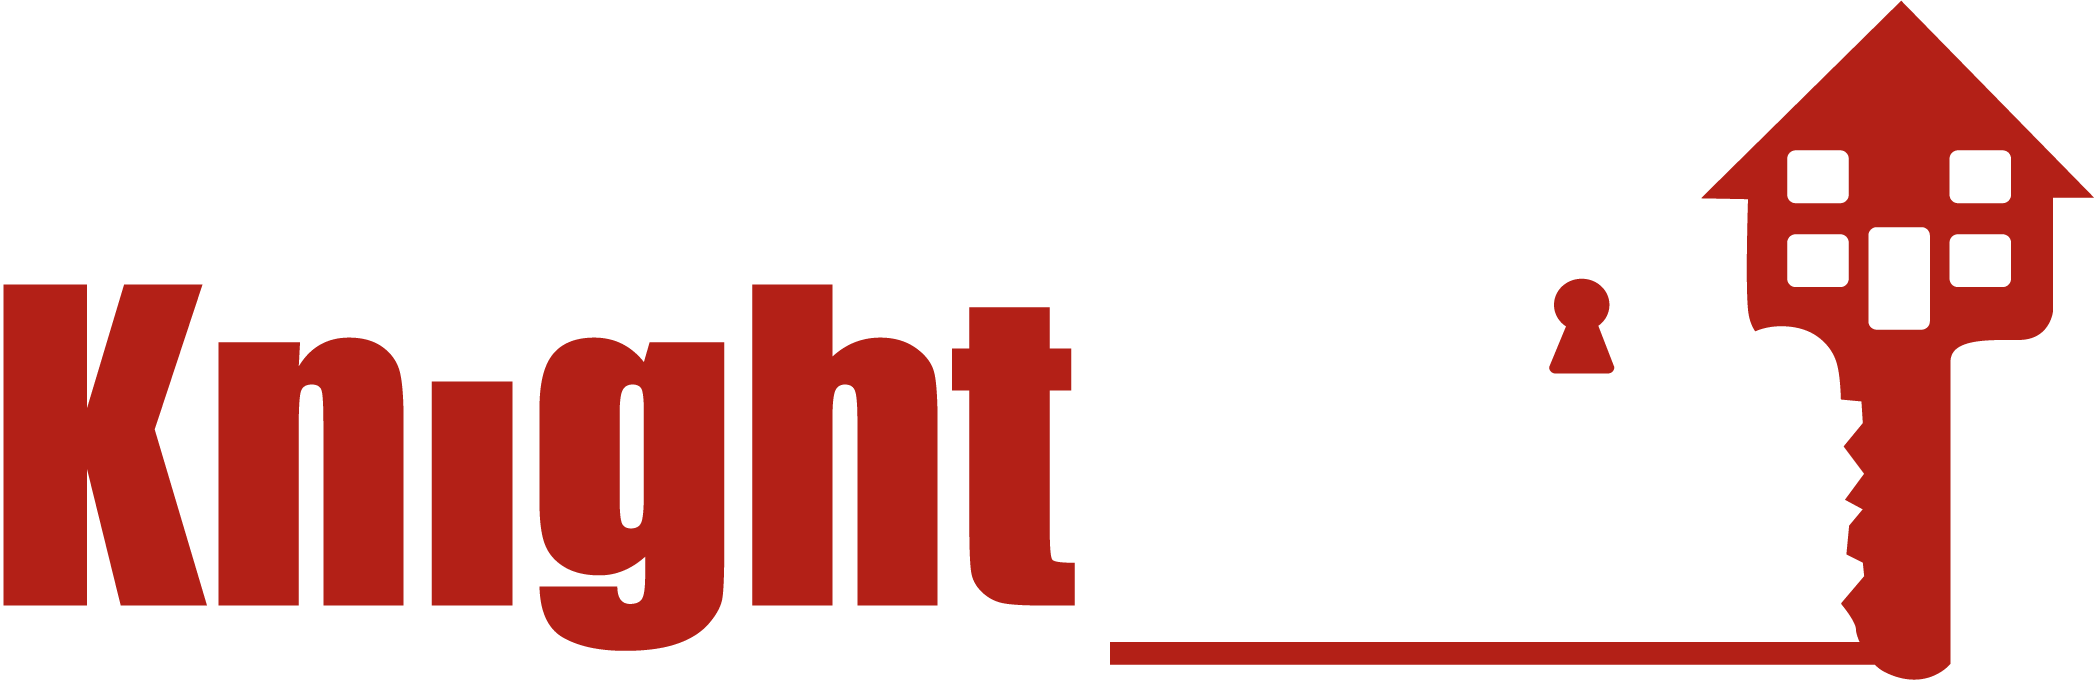 KnightBain logo